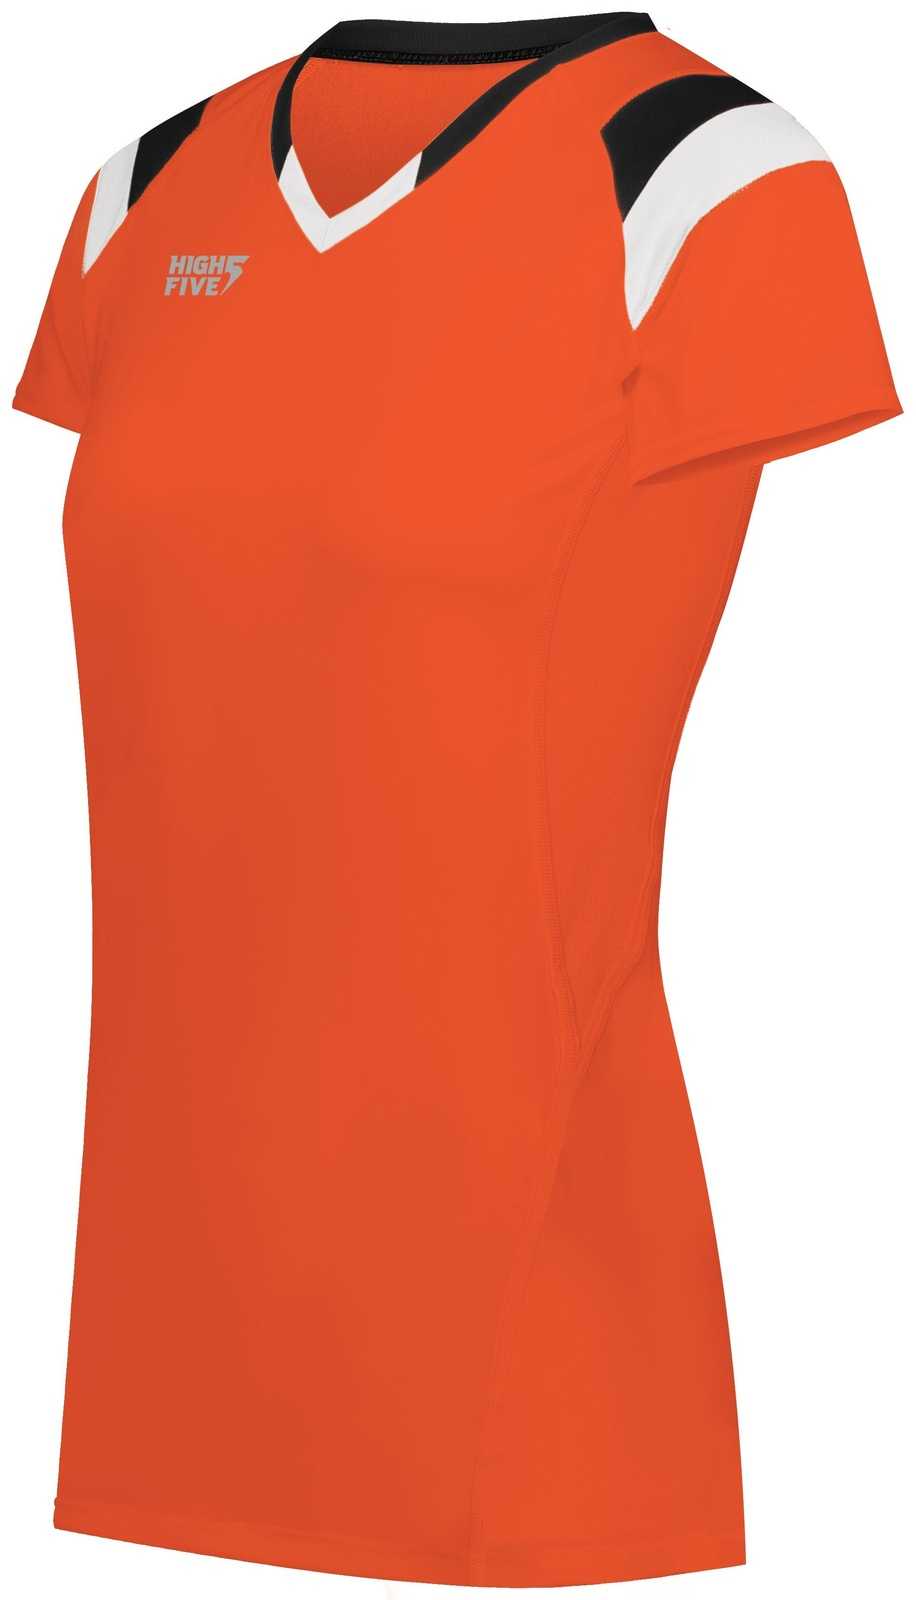 High Five 342252 Ladies TruHit Tri Short Sleeve Jersey - Orange Black White - HIT a Double